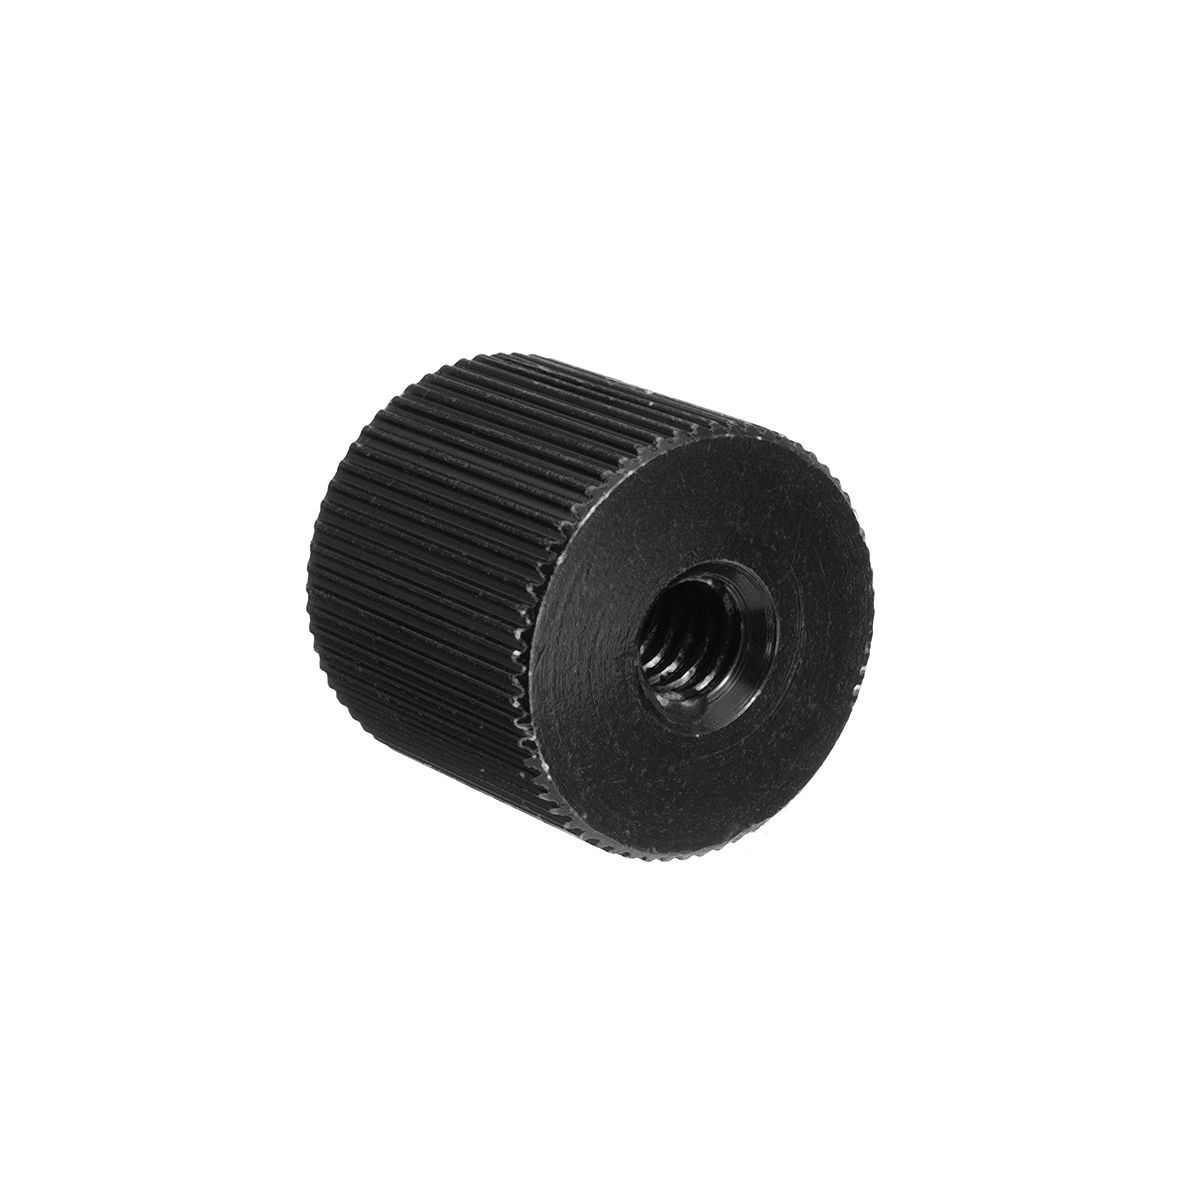 14-inch-Female-Tripod-Mount-Screw-to-Flash-Hot-Shoe-Adapter-for-Tripod-Camera-1126310